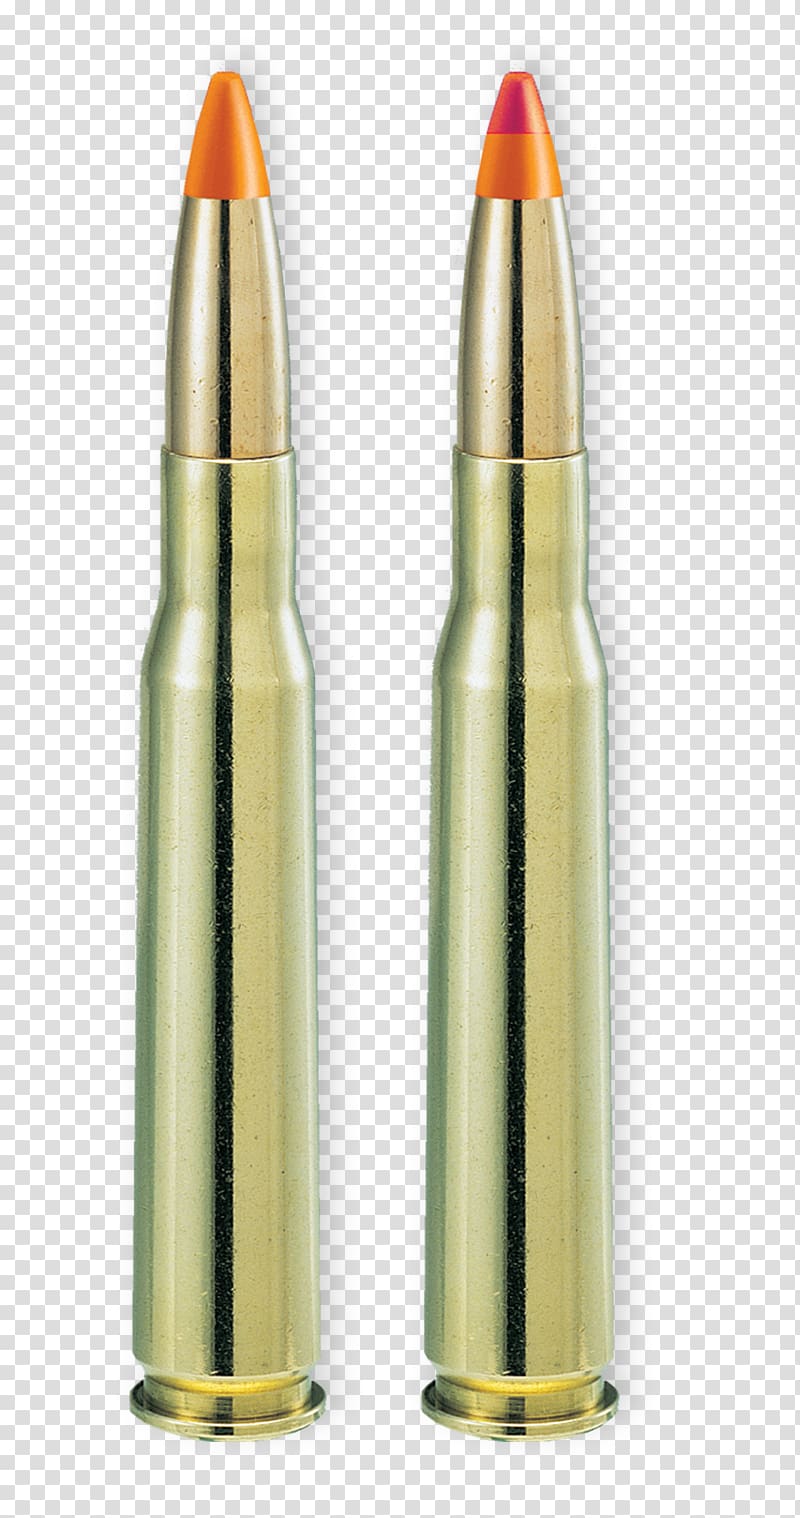 Ammunition Bullet Caliber Cartridge Gun, ammunition transparent background PNG clipart